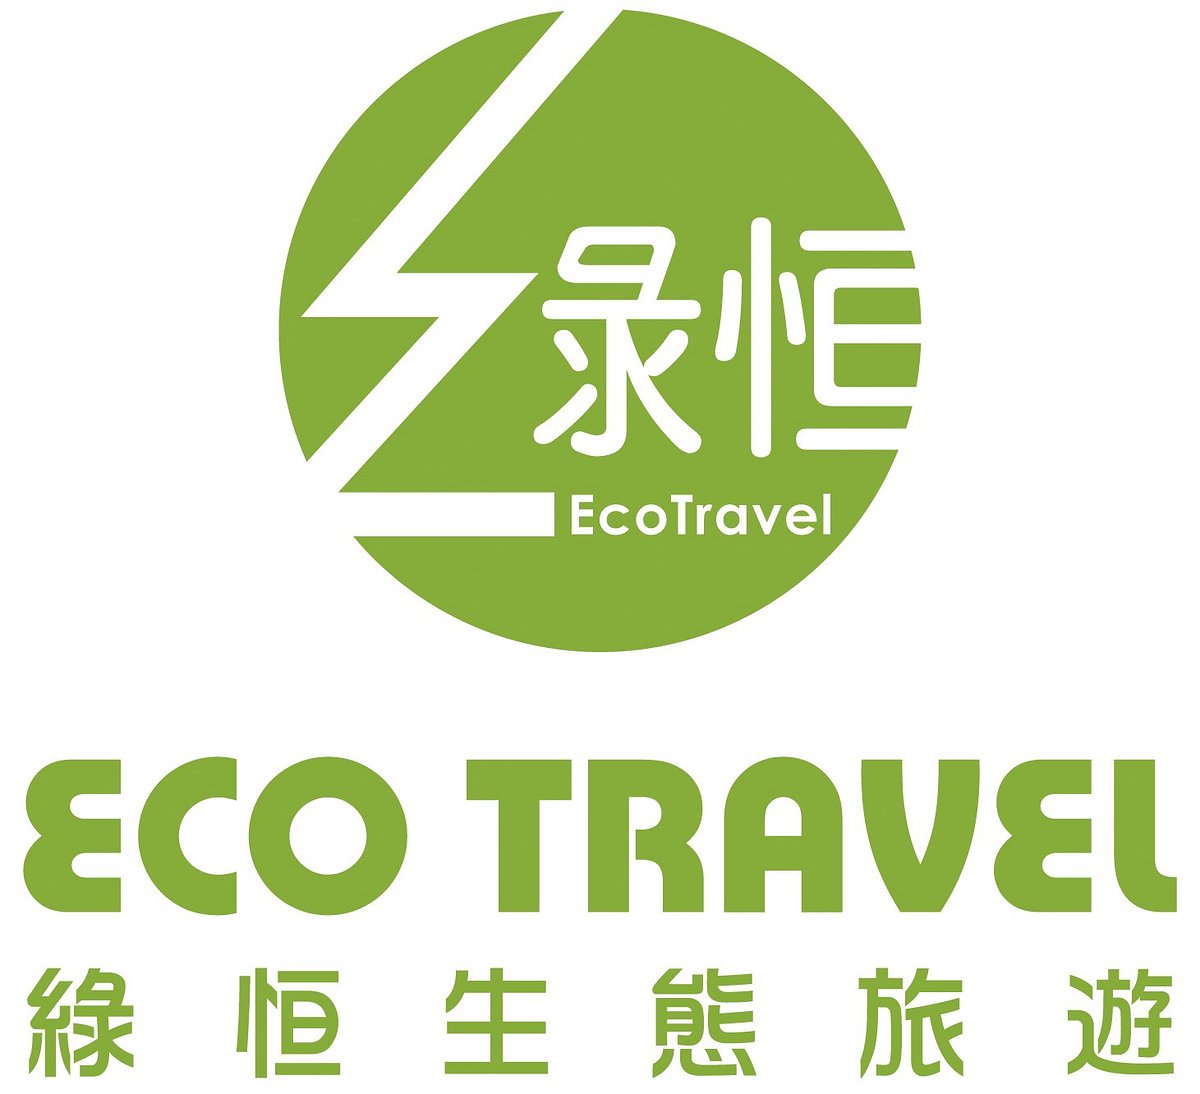 eco travel ph company